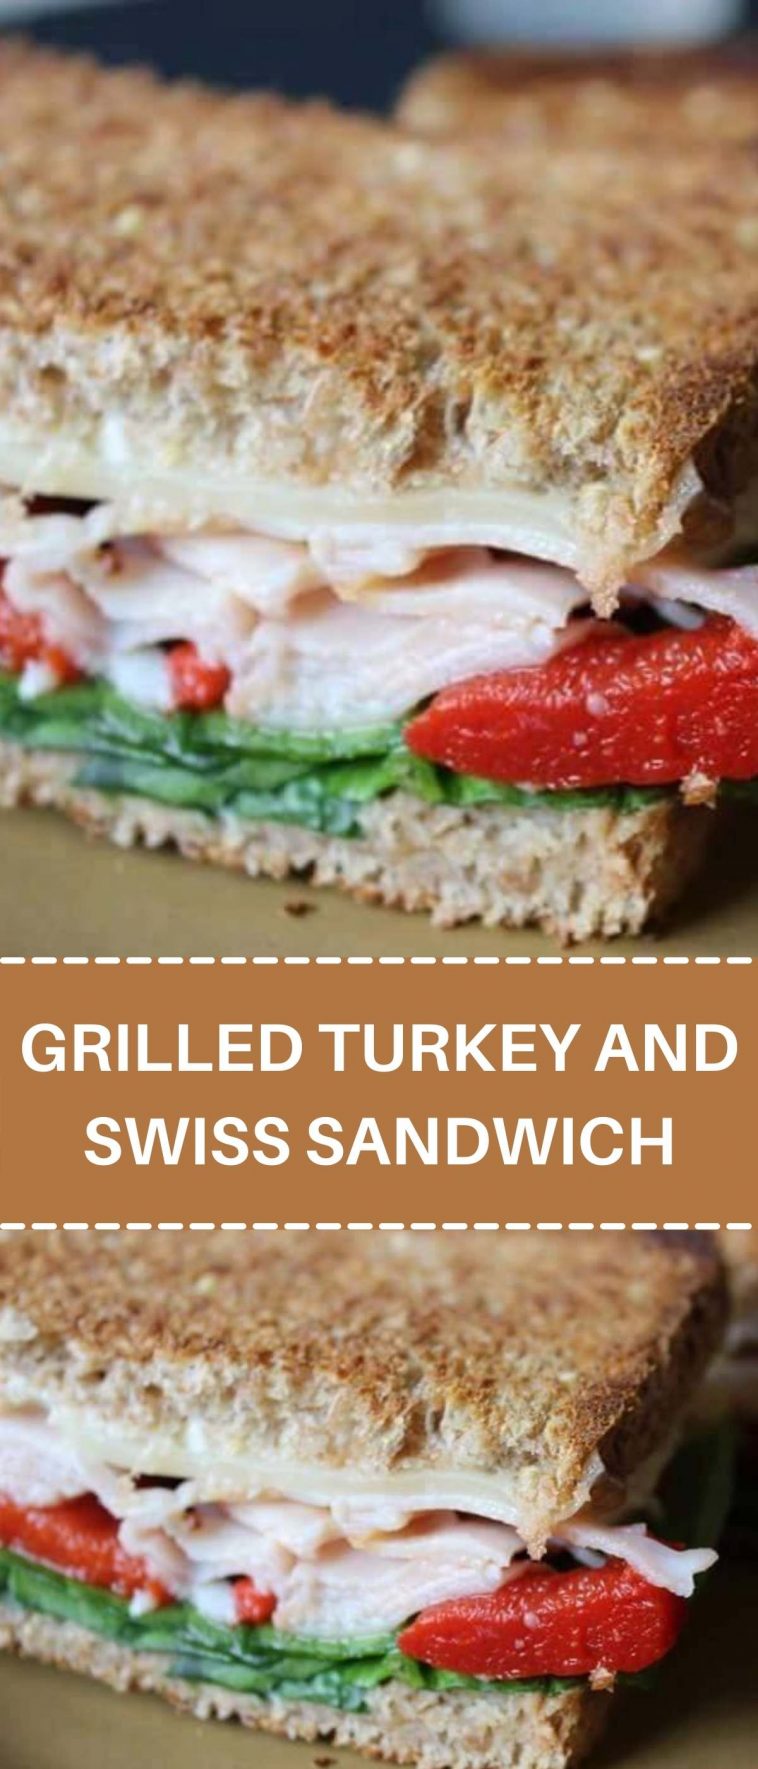 GRILLED TURKEY AND SWISS SANDWICH